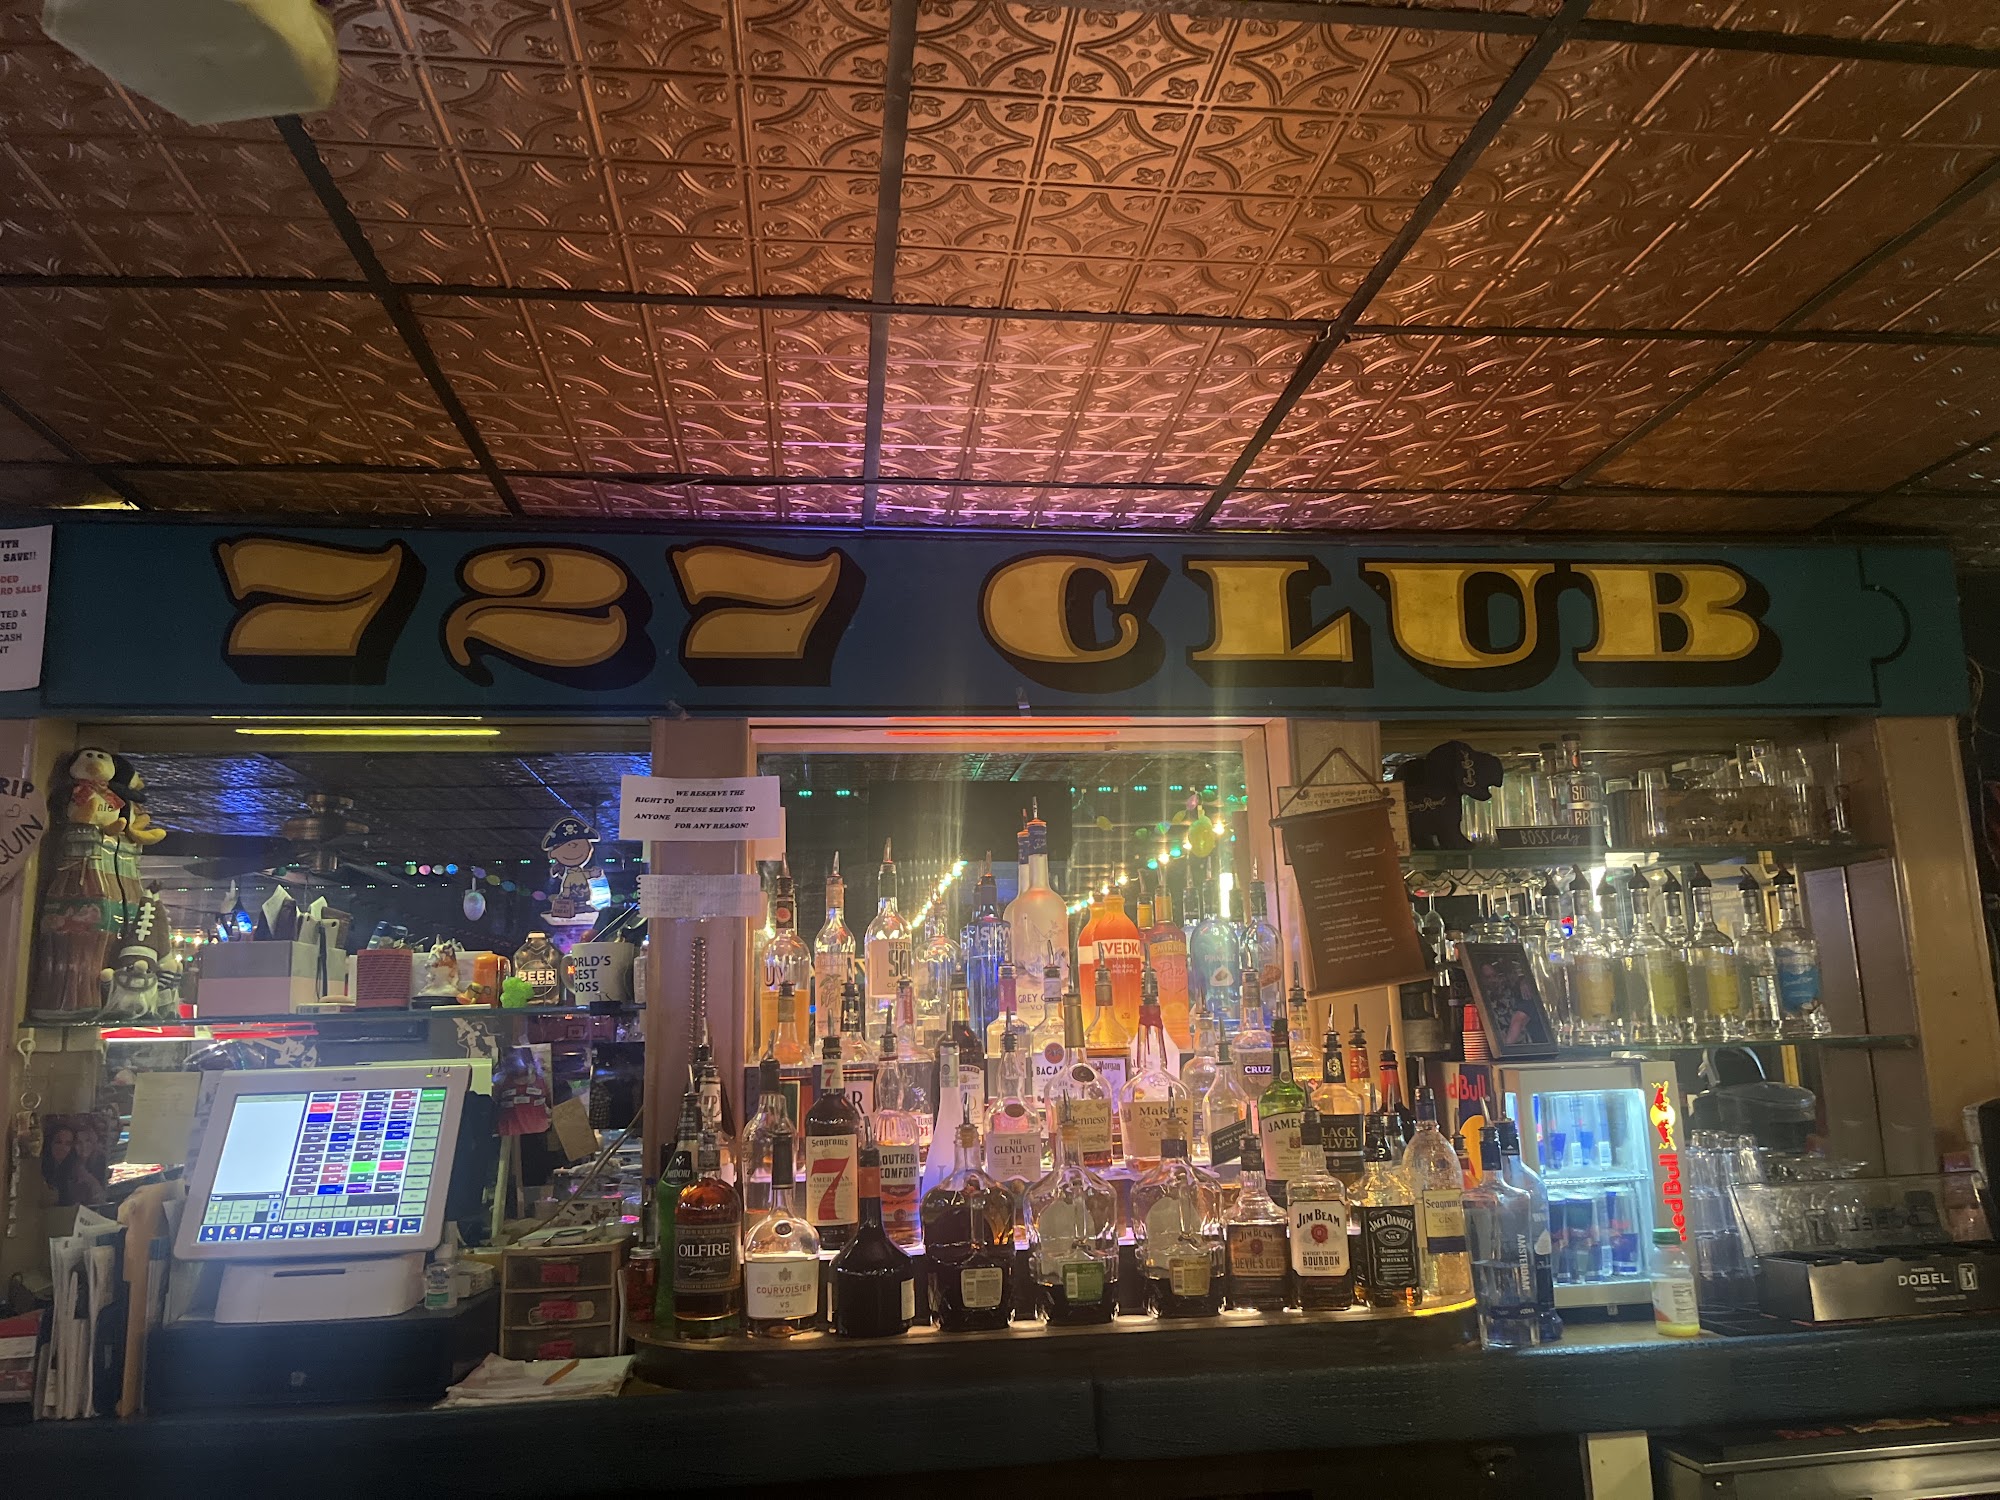 Steve's 727 Club